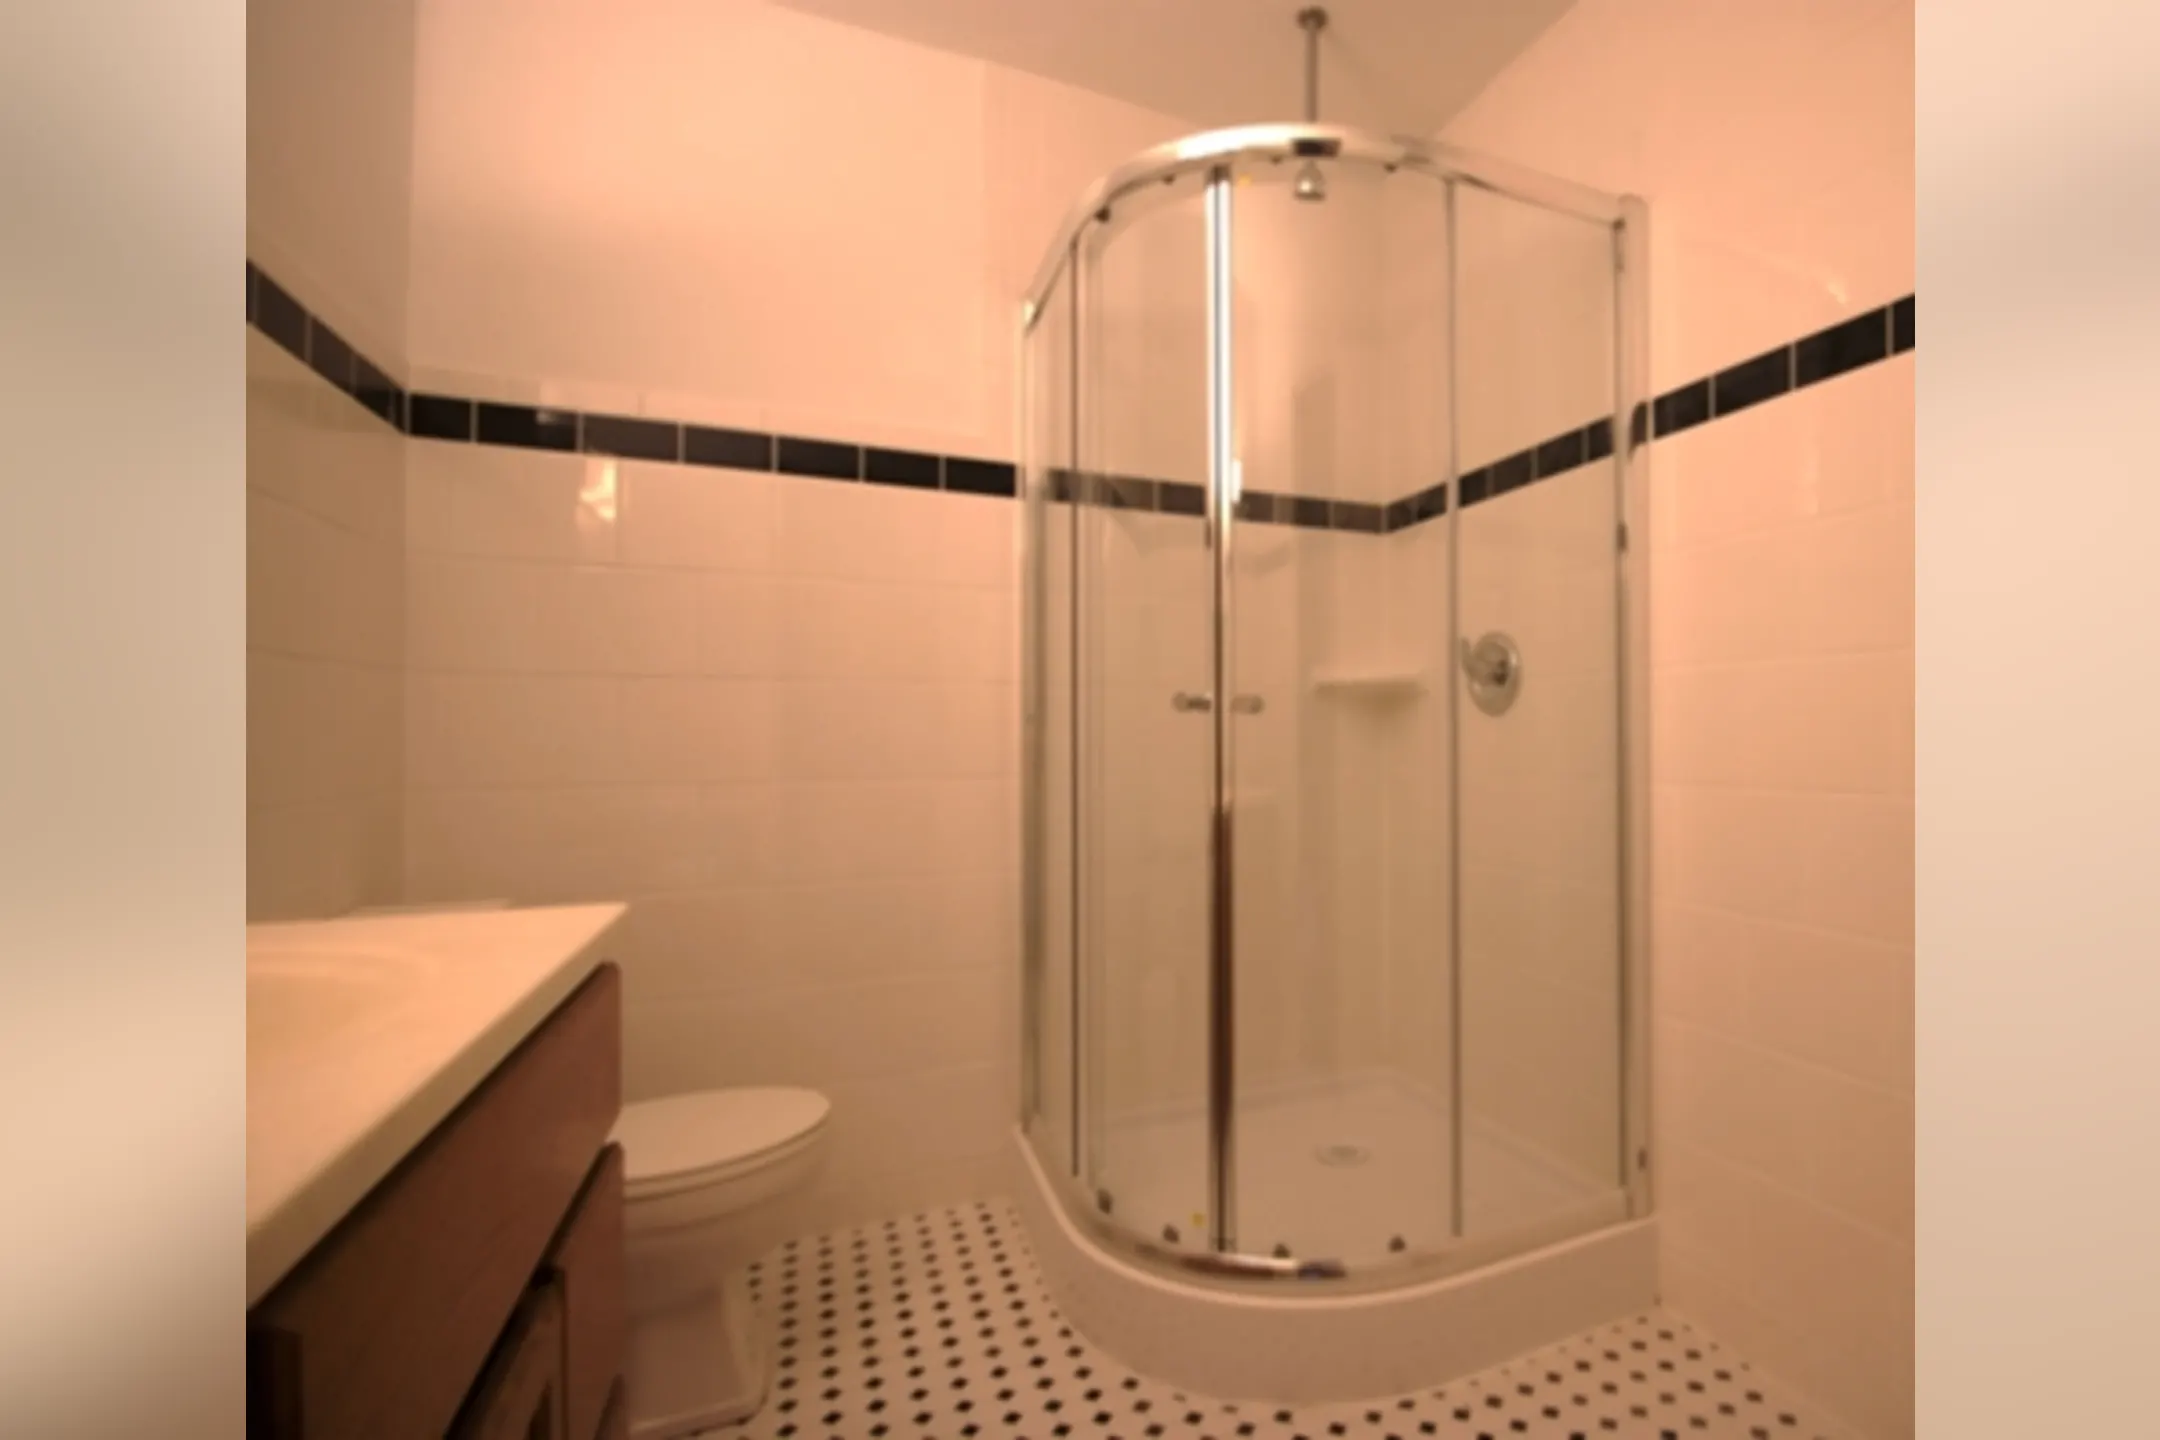 Bathroom - Param Apartments - Villa Park, IL